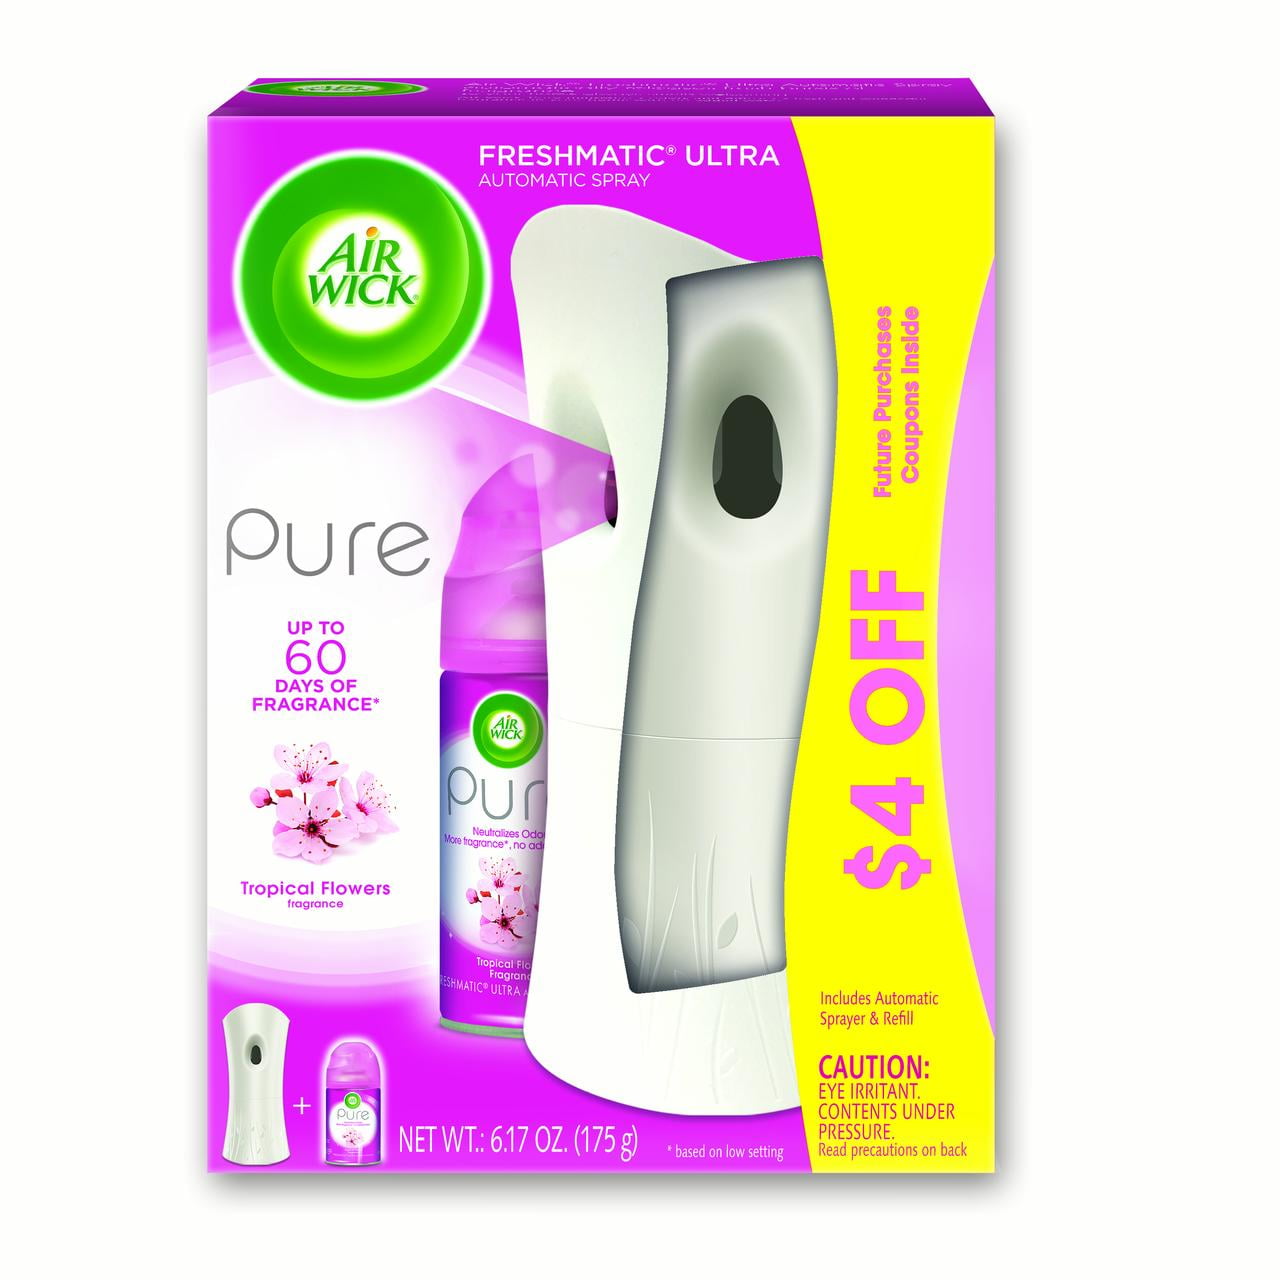 buy-air-wick-pure-freshmatic-automatic-spray-kit-gadget-1-refill